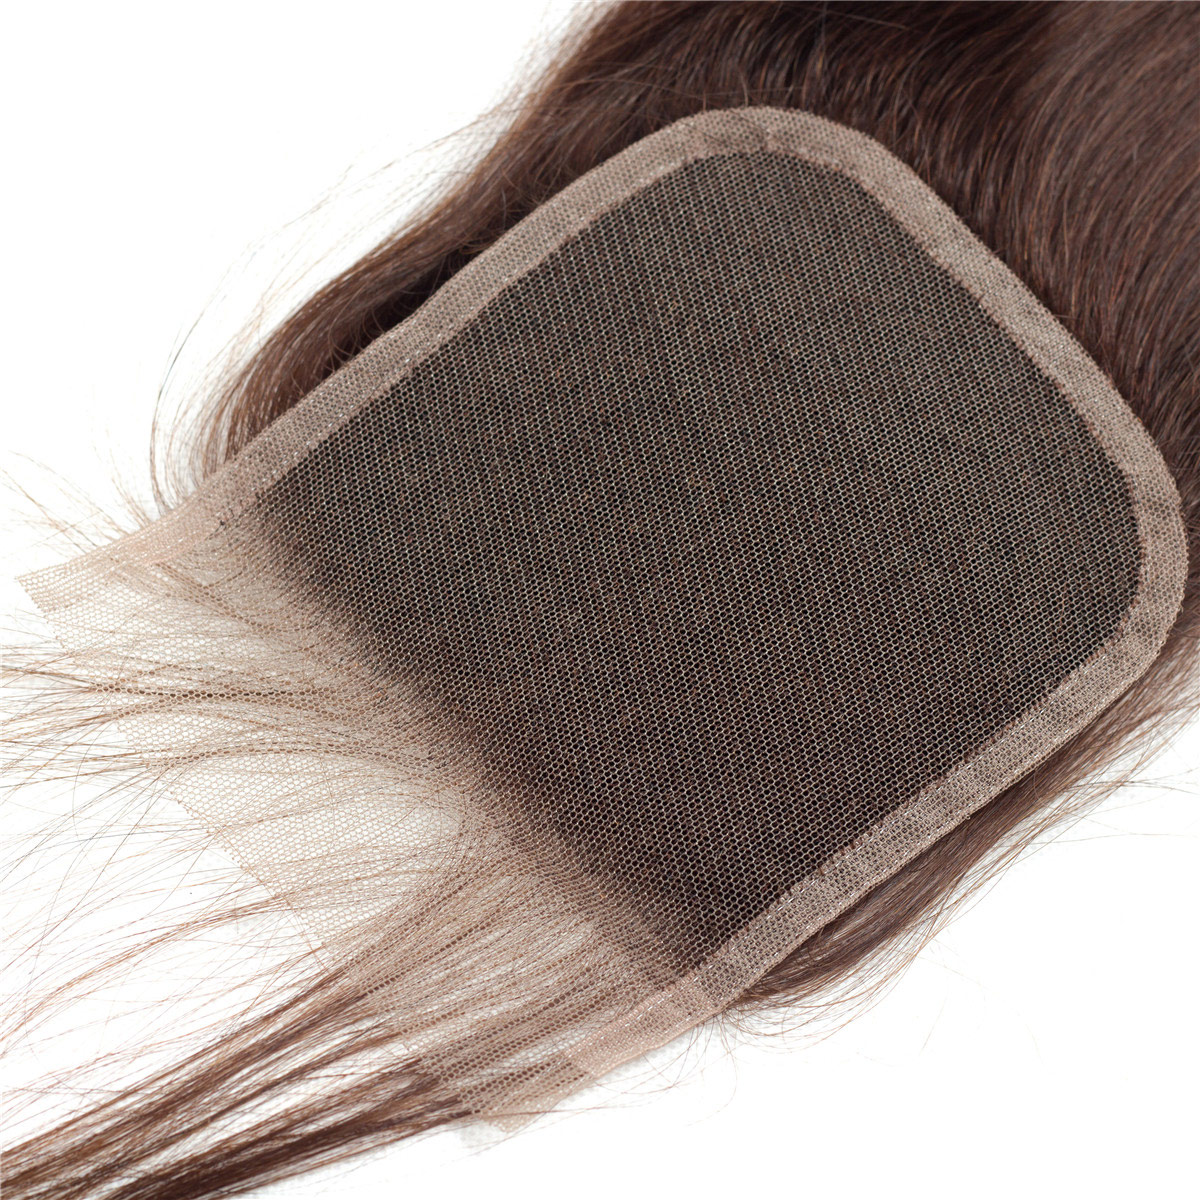 Wigsbuy Straight Hair Closure #2 Dark Brown Human Hair Lace Closure 10-20 Inches